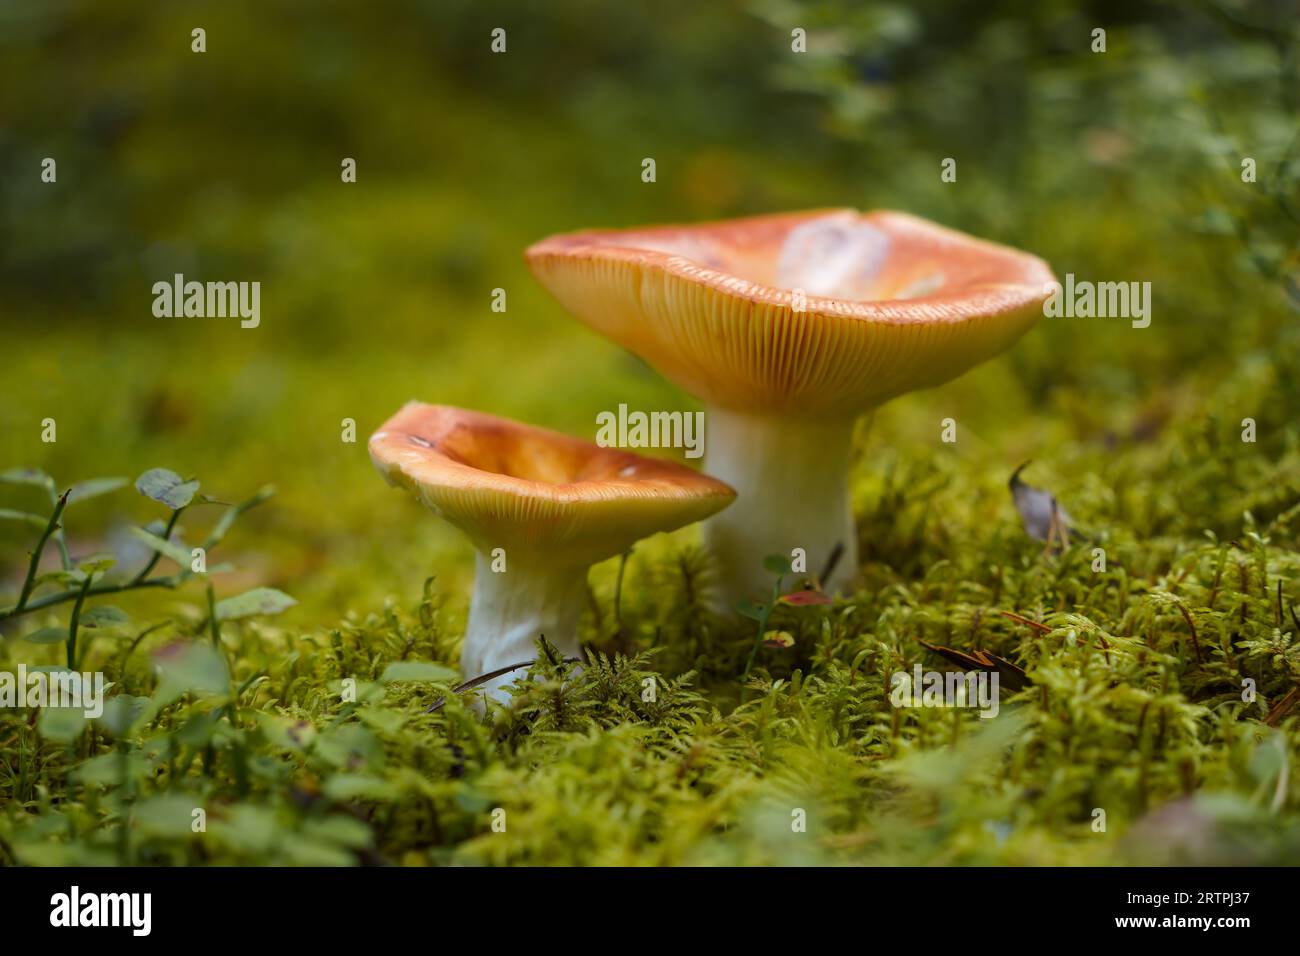 Two mushrooms (Russula) close up view, macro photo. Stock Photo